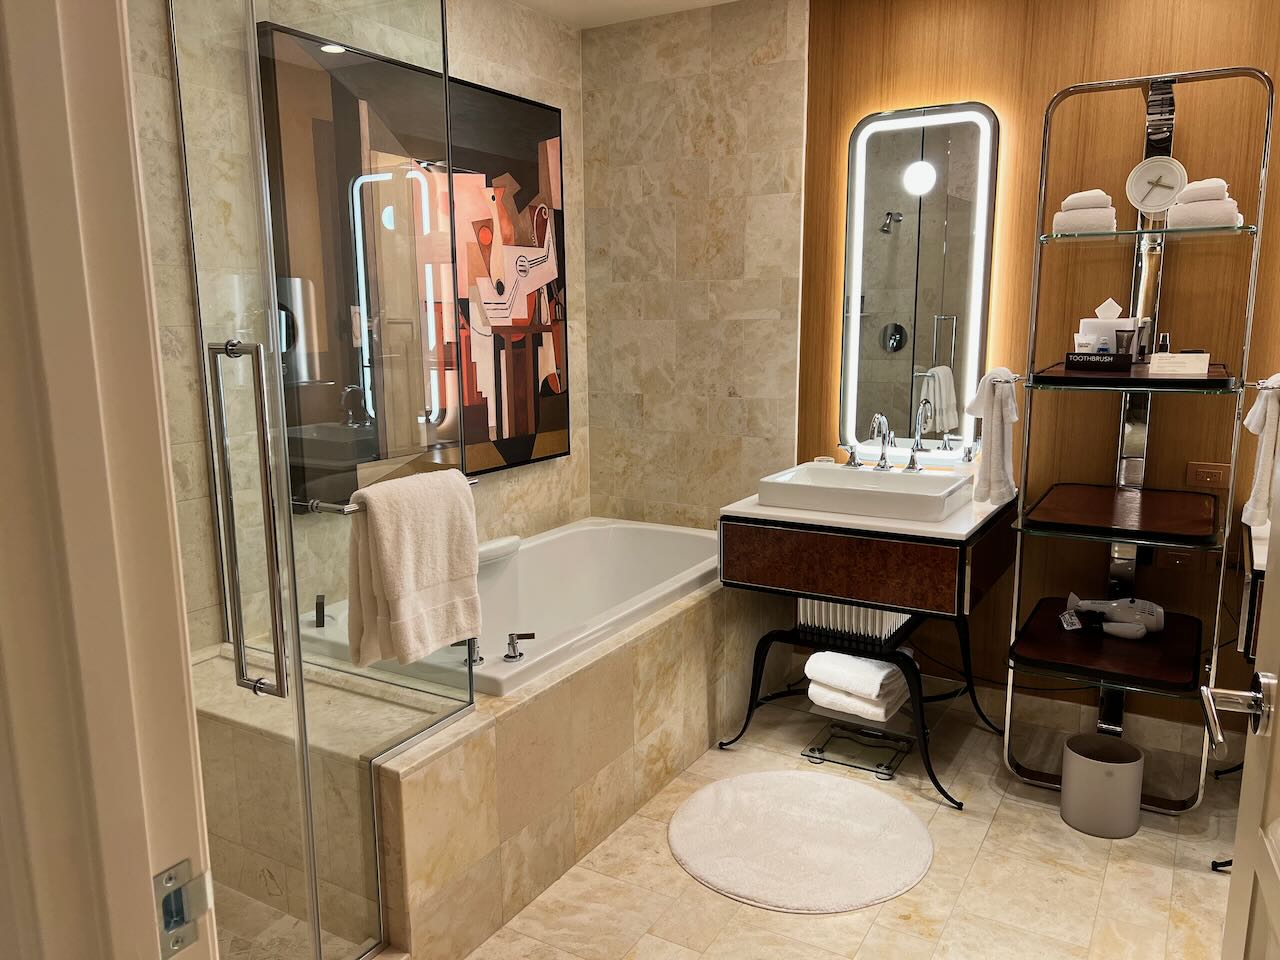 New Wynn Las Vegas Rooms - bathroom tub